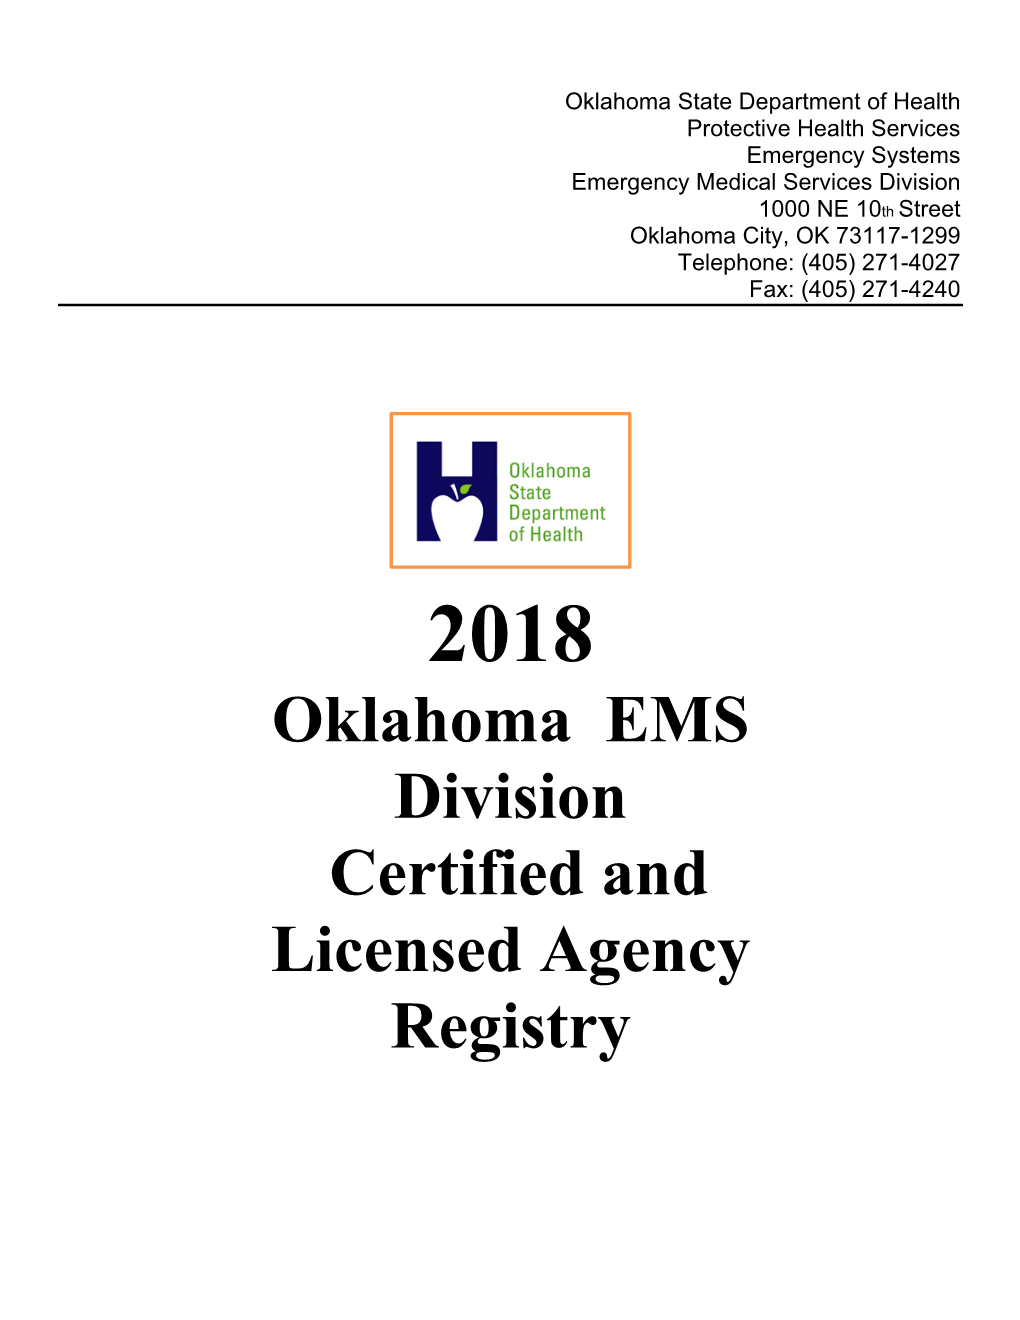 2018 Oklahoma Ambulance Registry